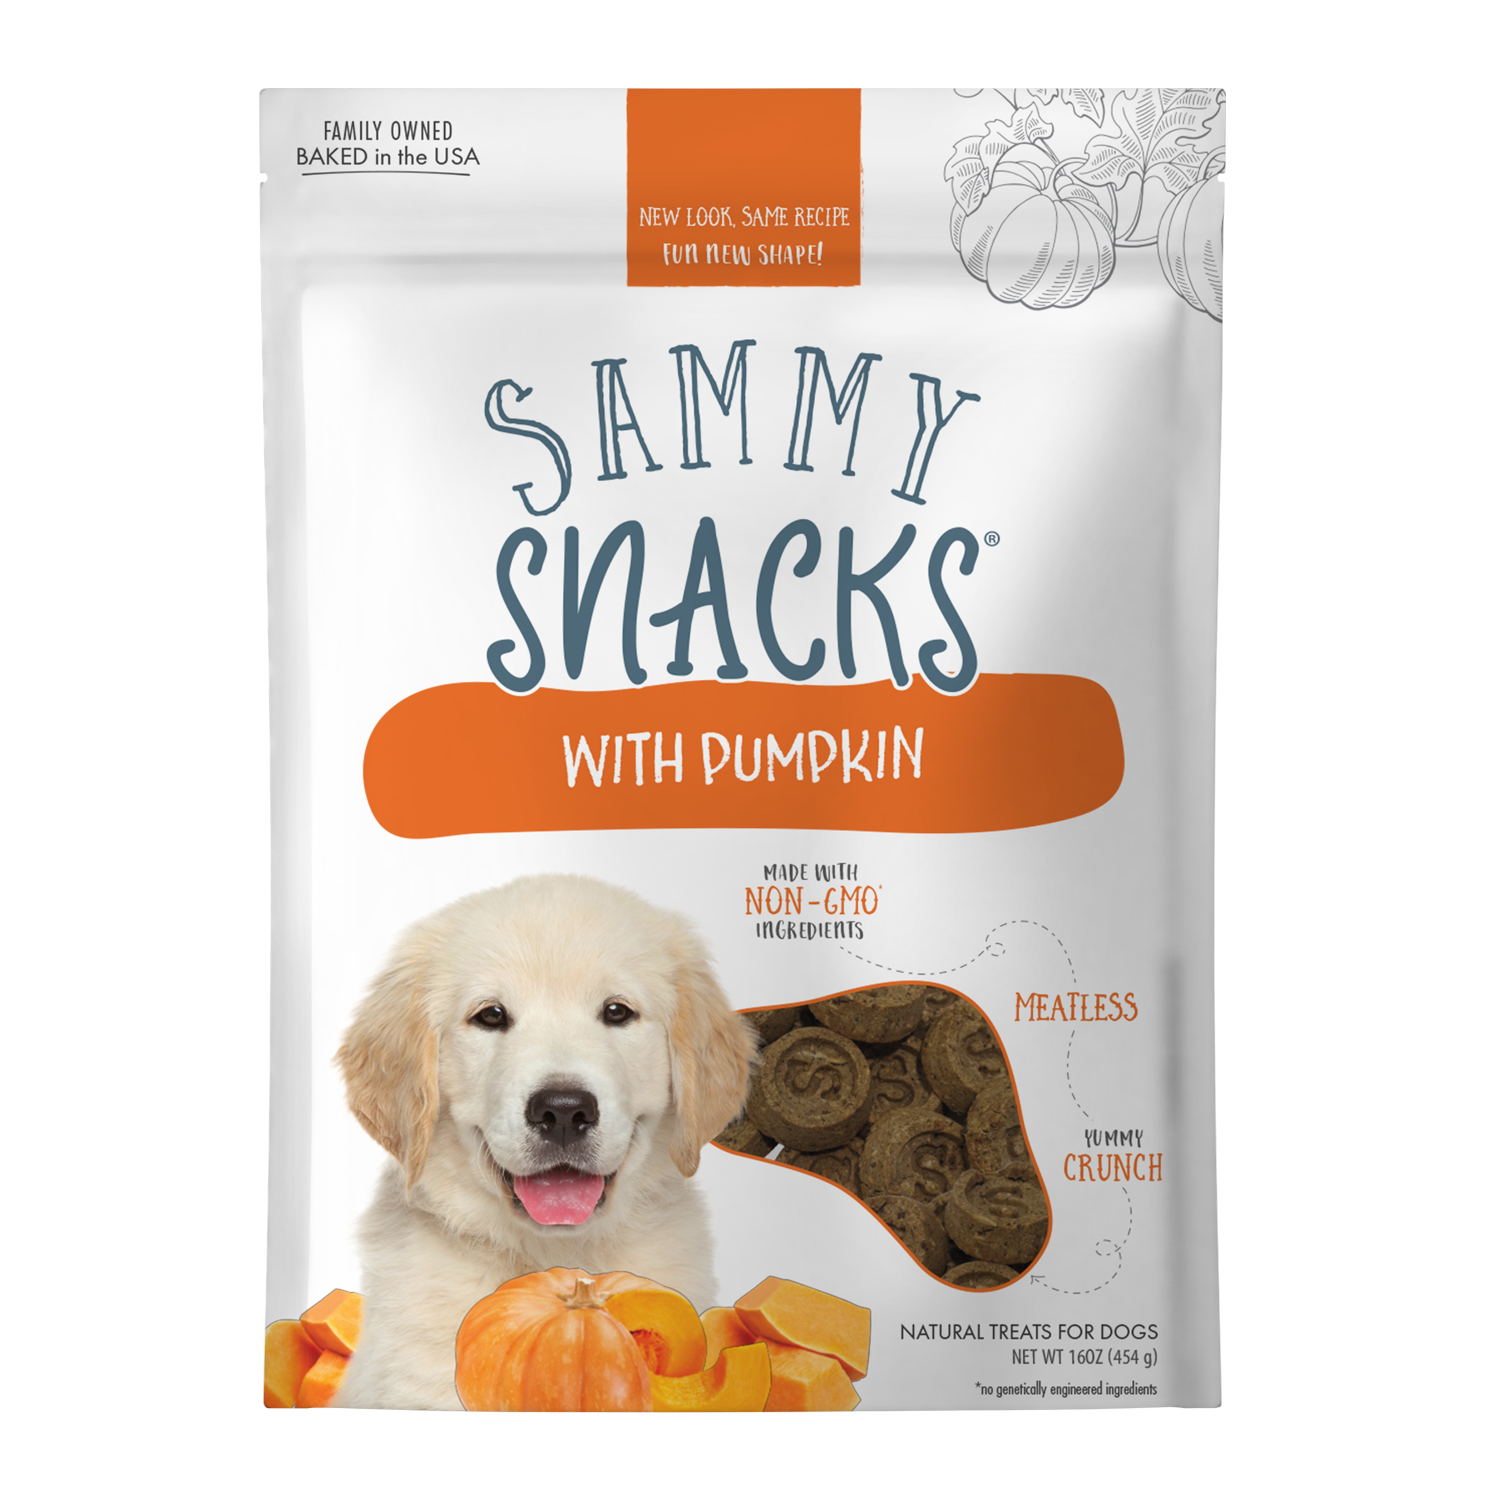 Sammy Snacks With Pumpkin